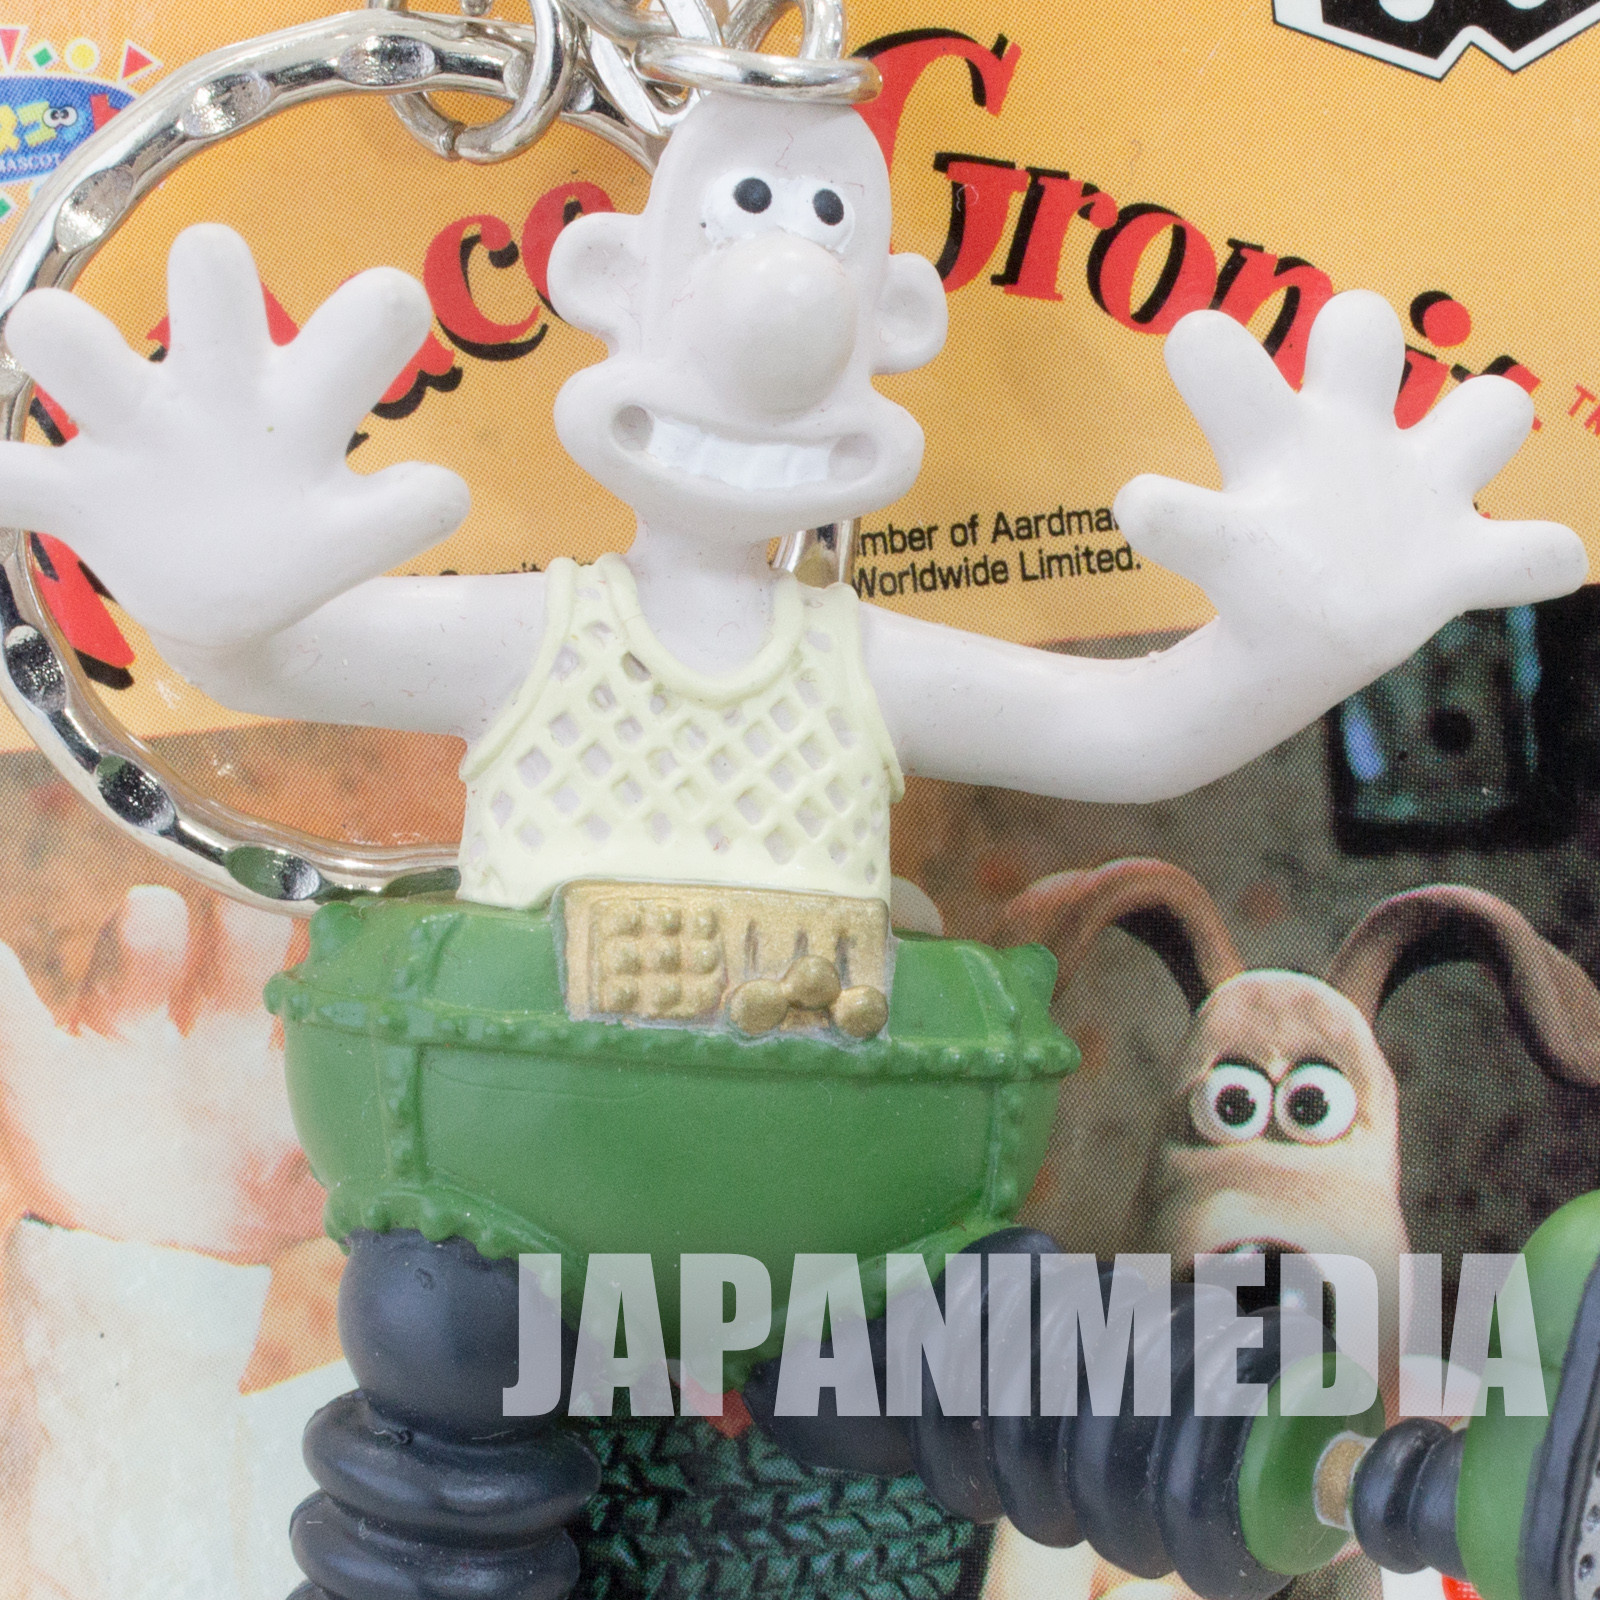 Wallace & Gromit WALLACE Figure Key Chain Banpresto JAPAN Ardman ANIME